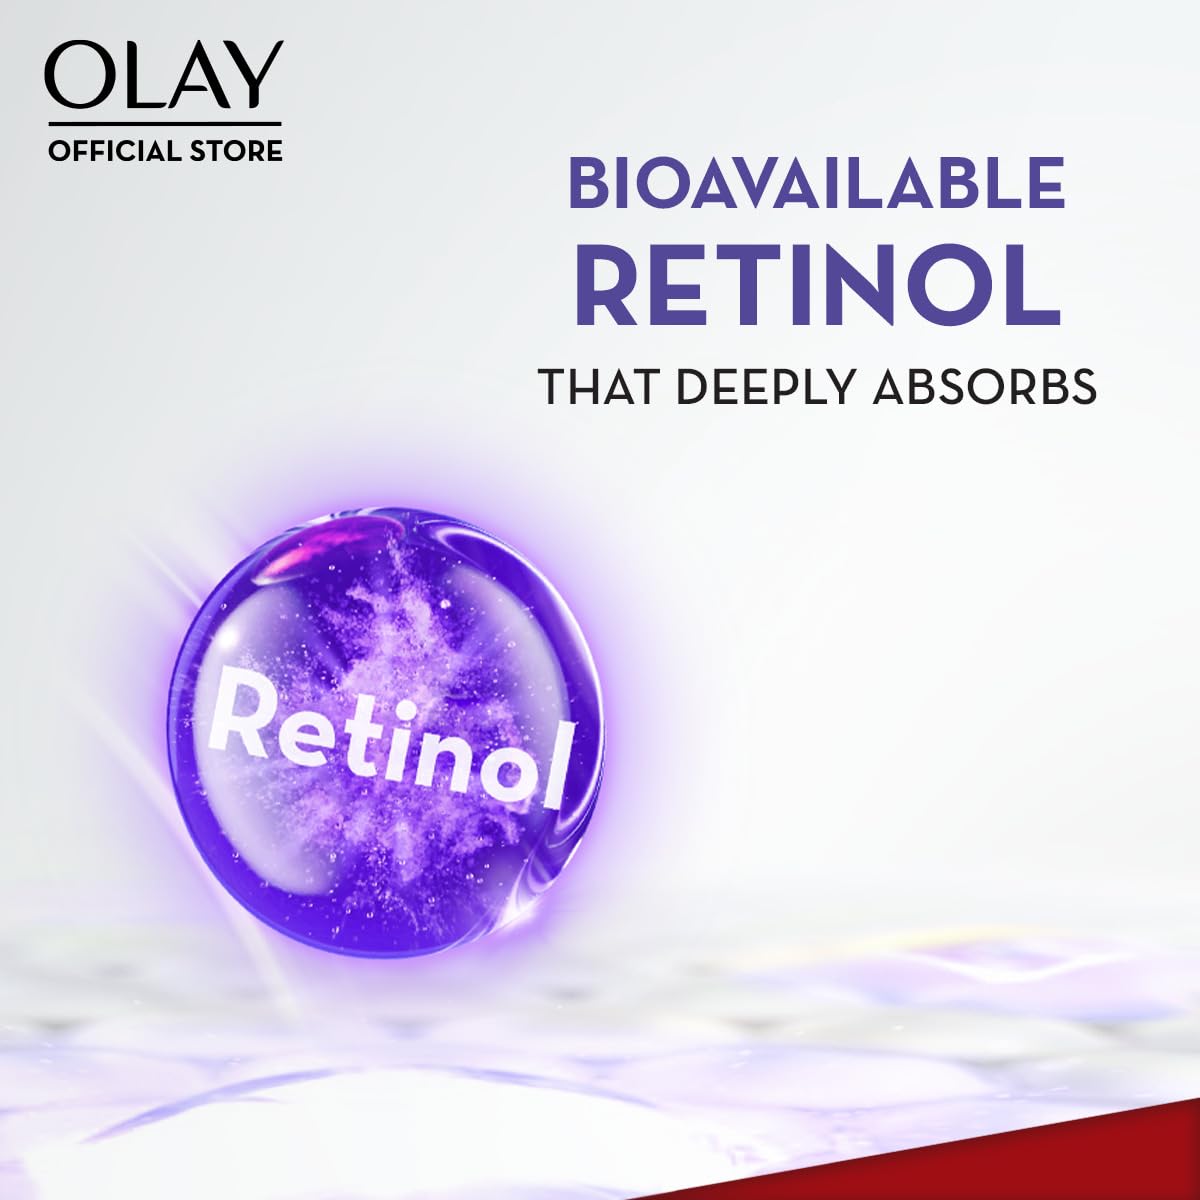 Olay Regenerist Retinol 24 Night Facial Serum (30ml)